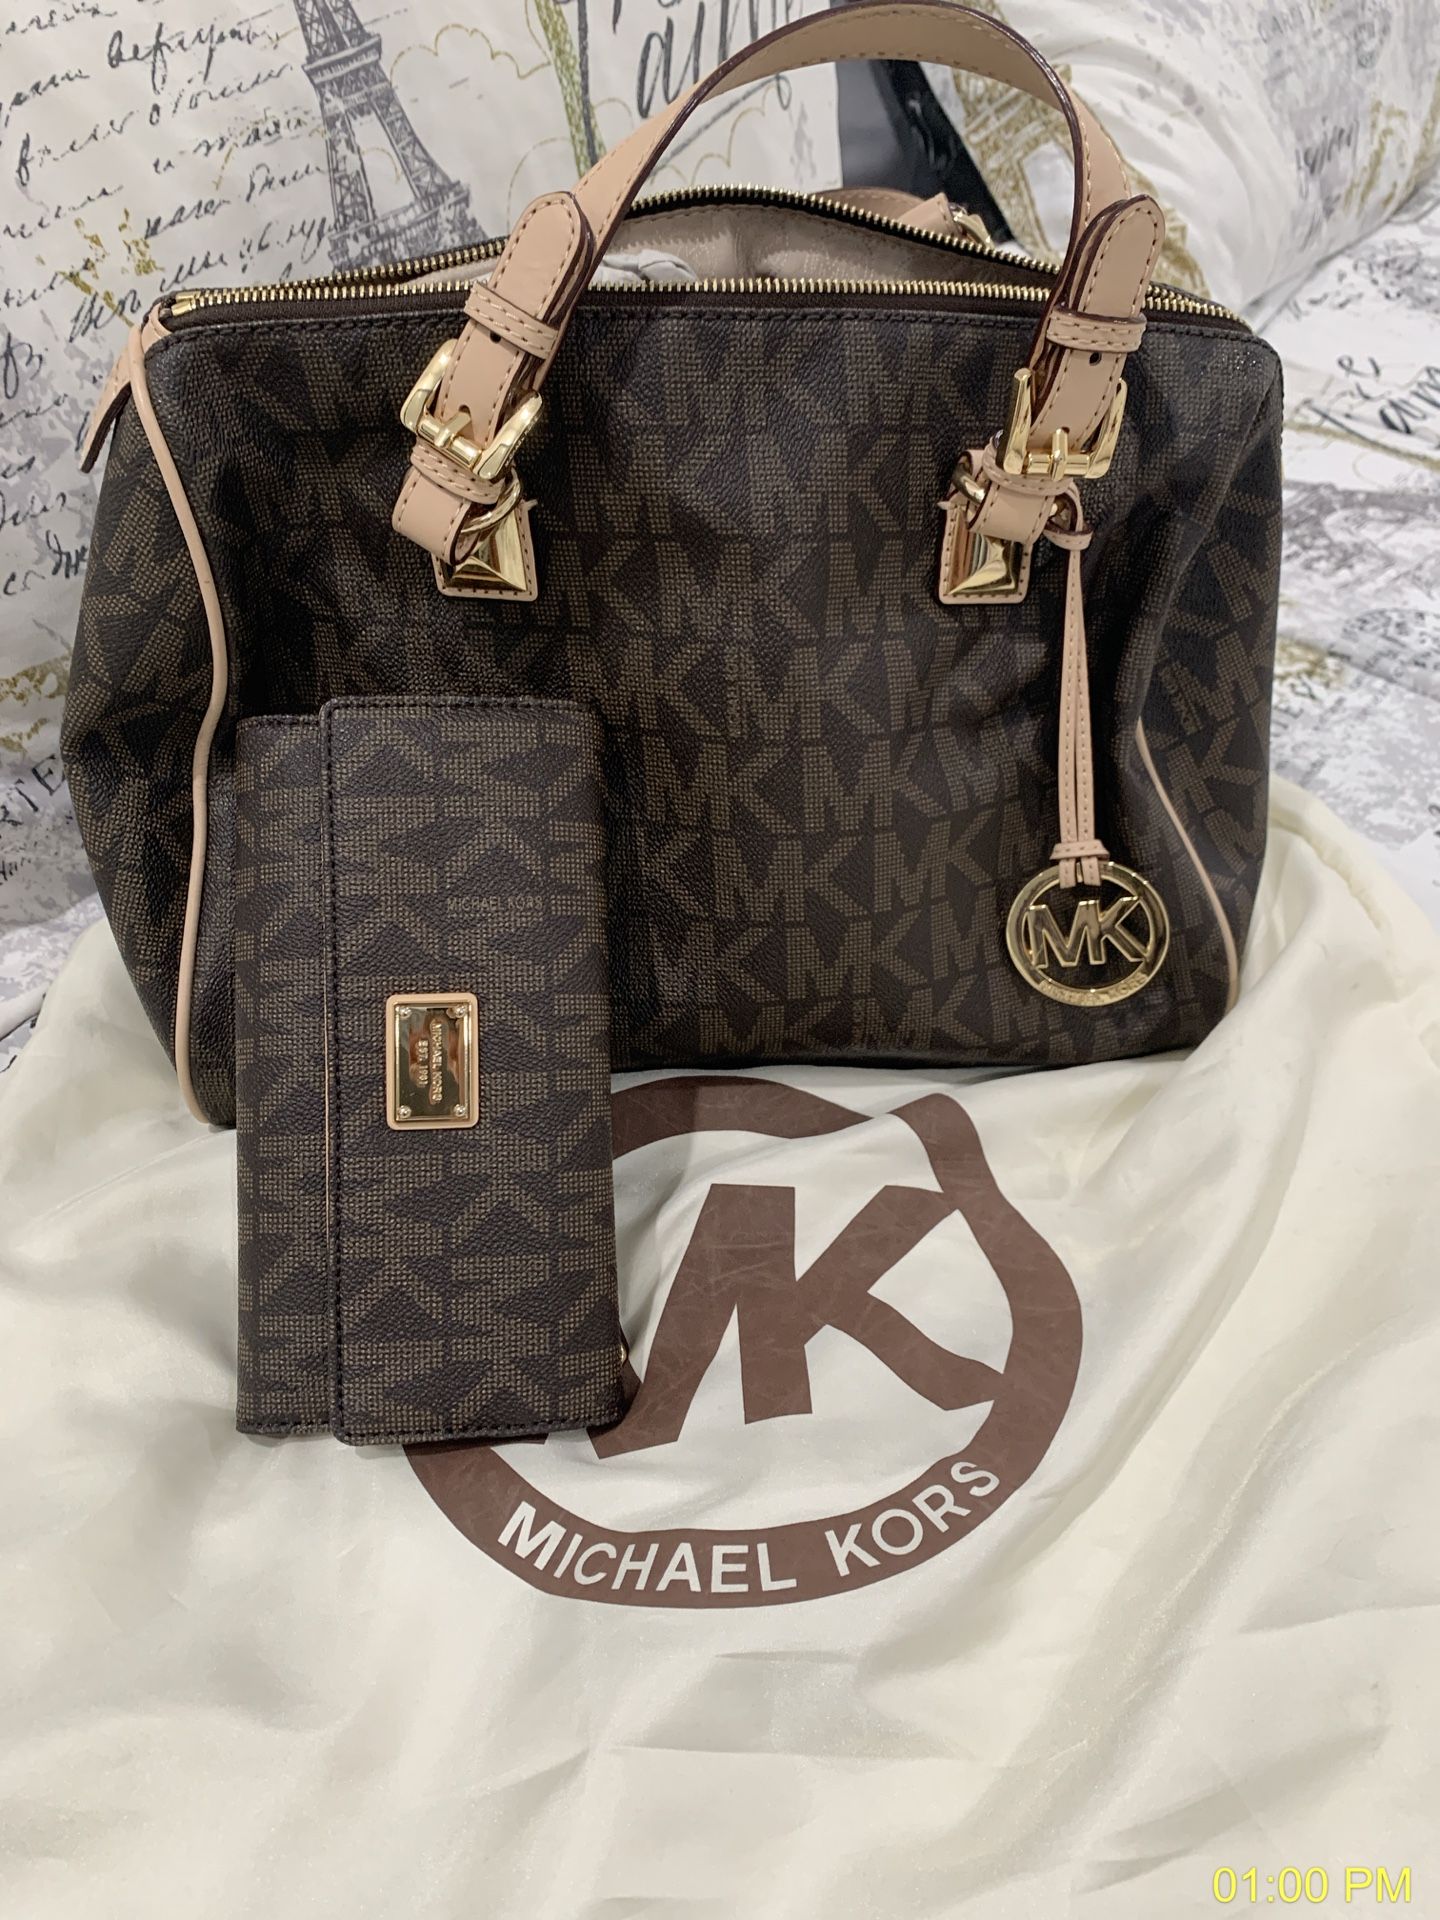 Authentic/Original Michael Kors Handbag